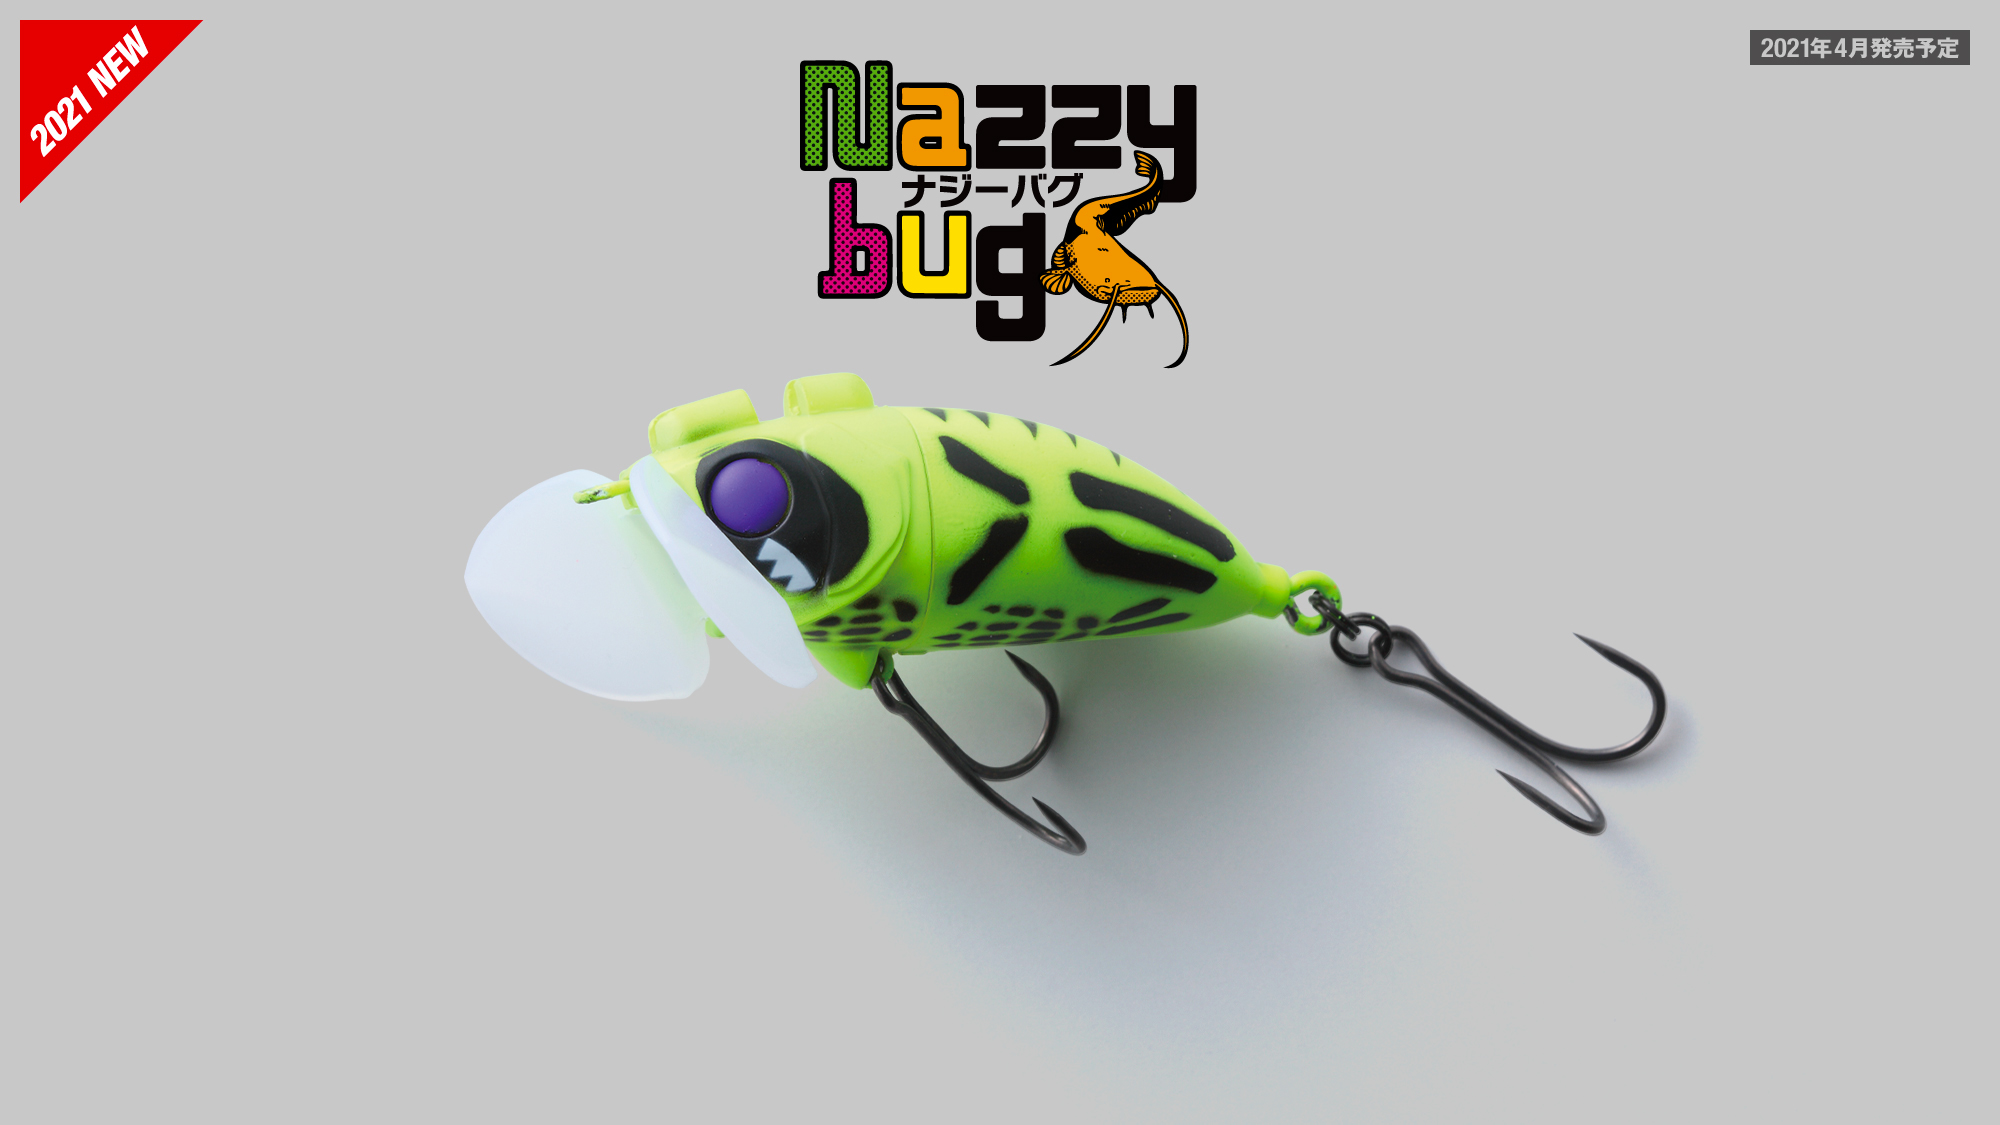  Nazzy bug / ナジーバグ